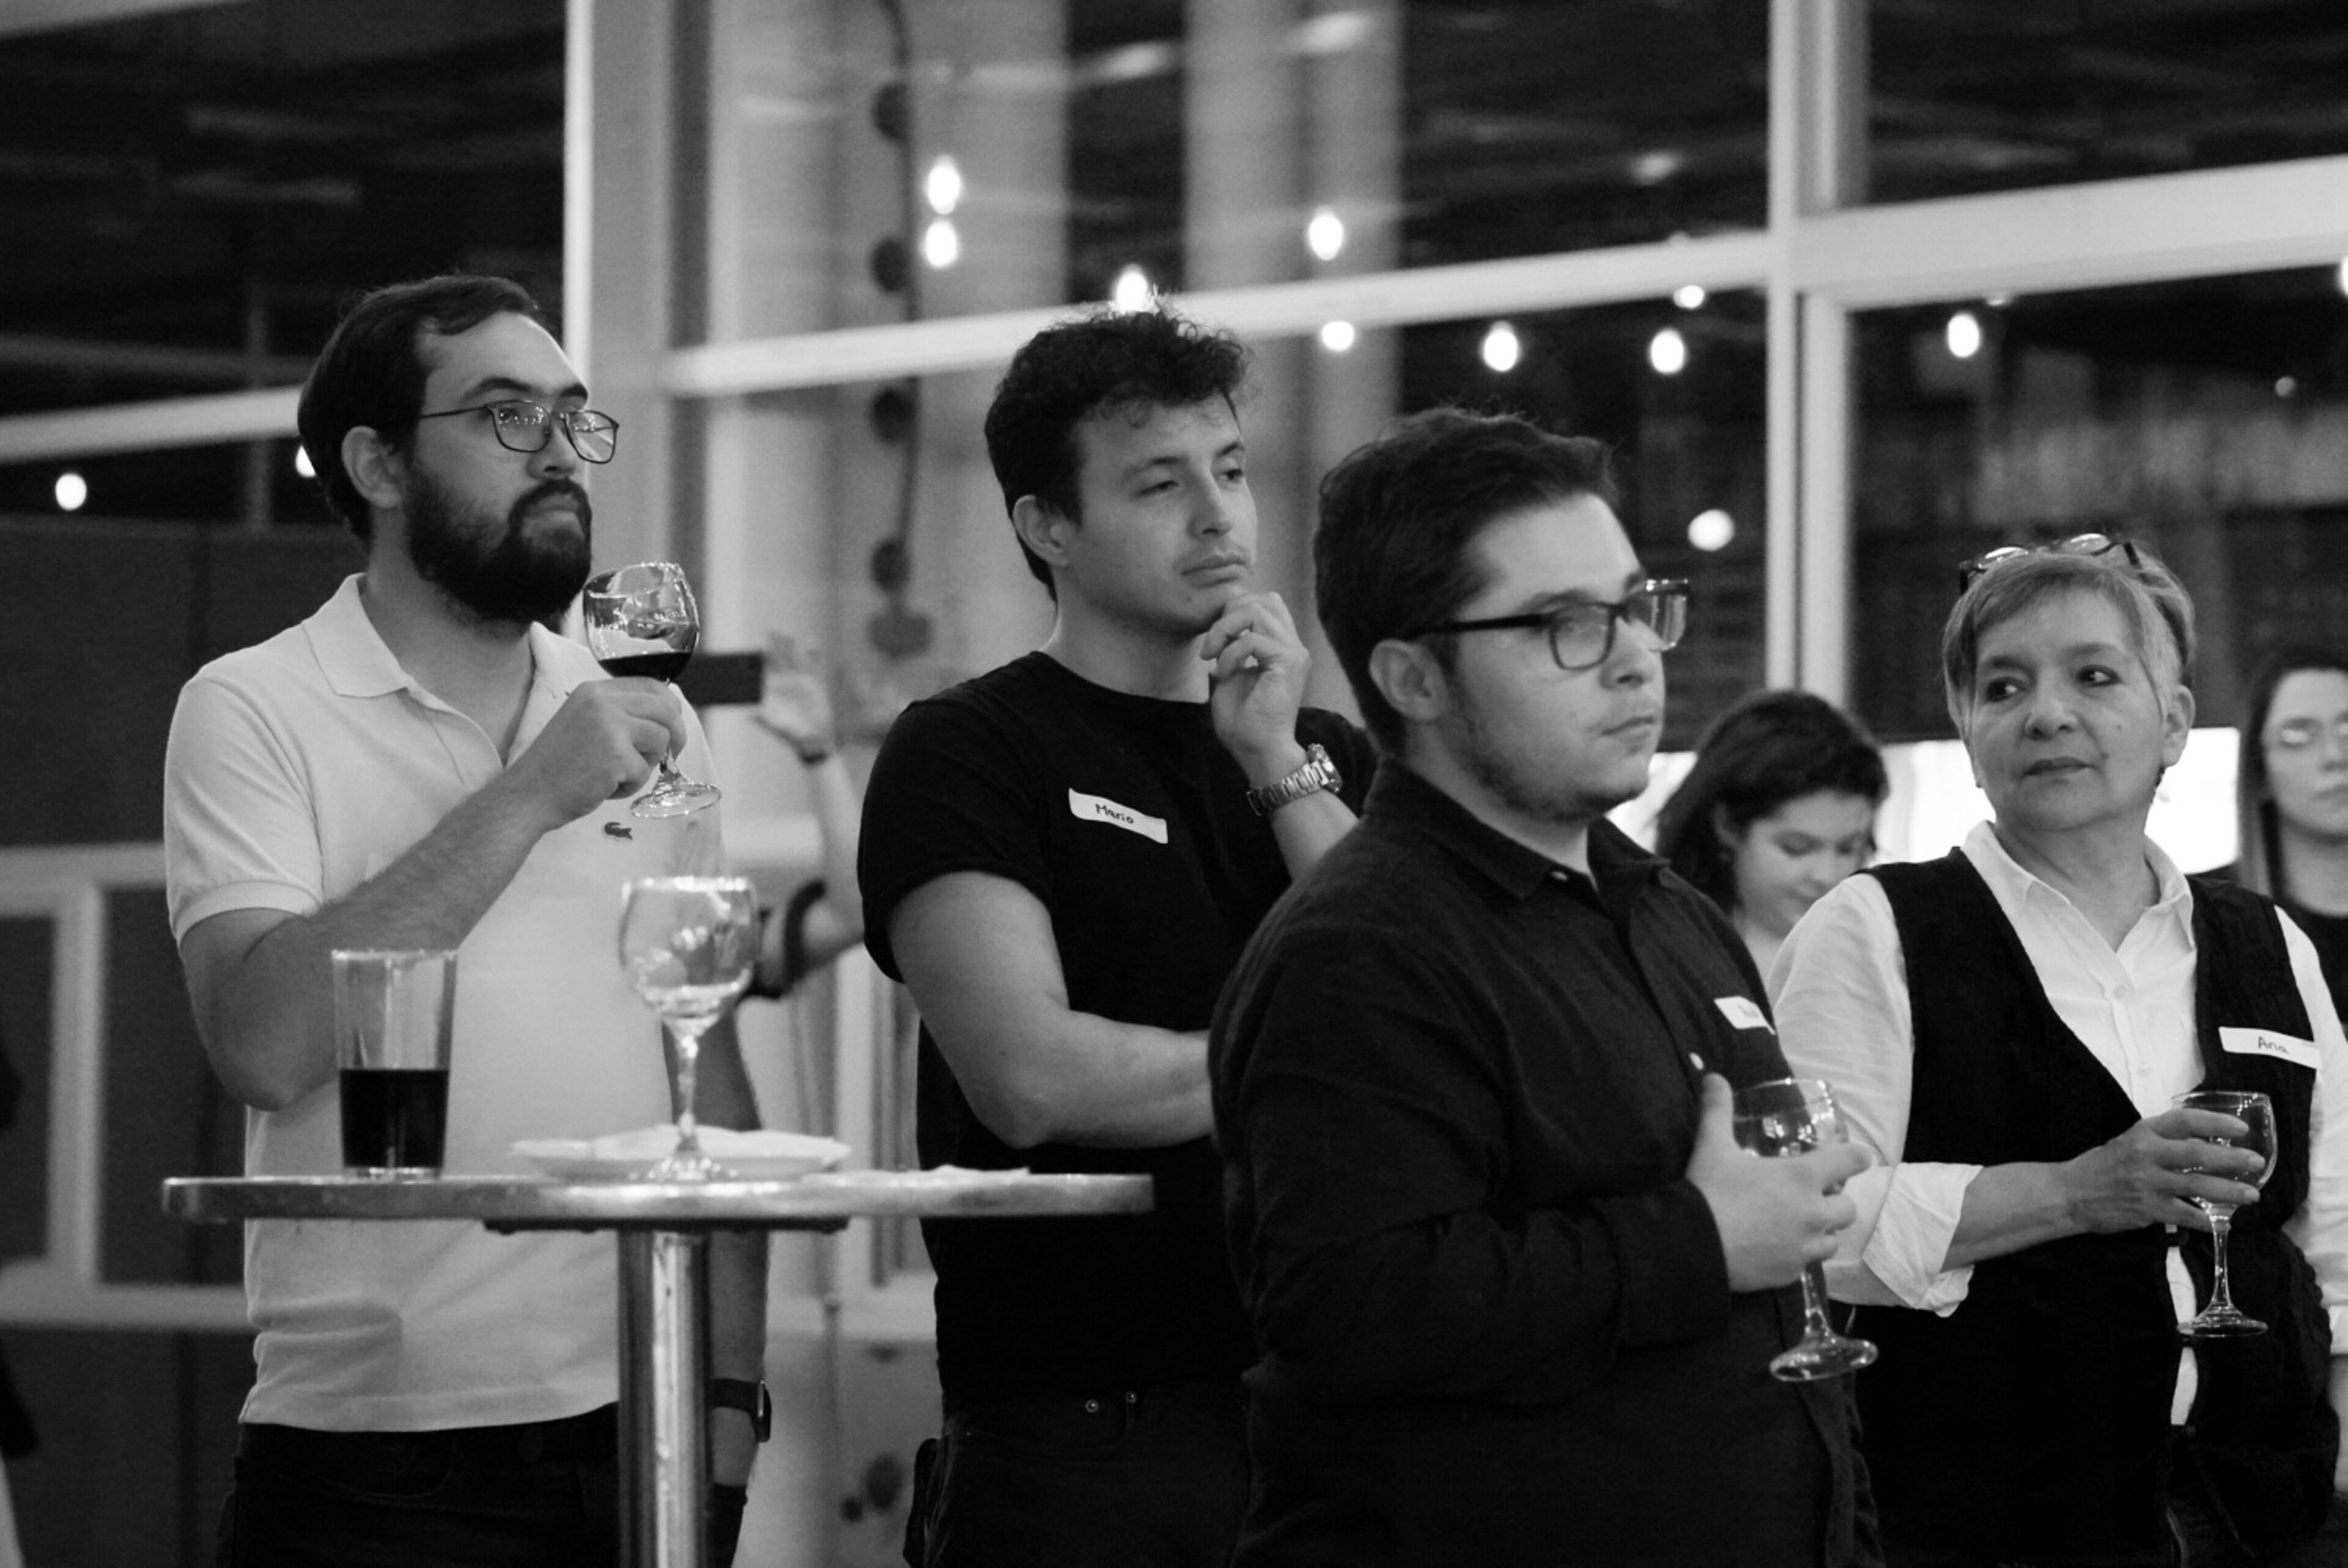 Un grupo de individuos atentos con copas de vino, escuchando con interés en una reunión social.